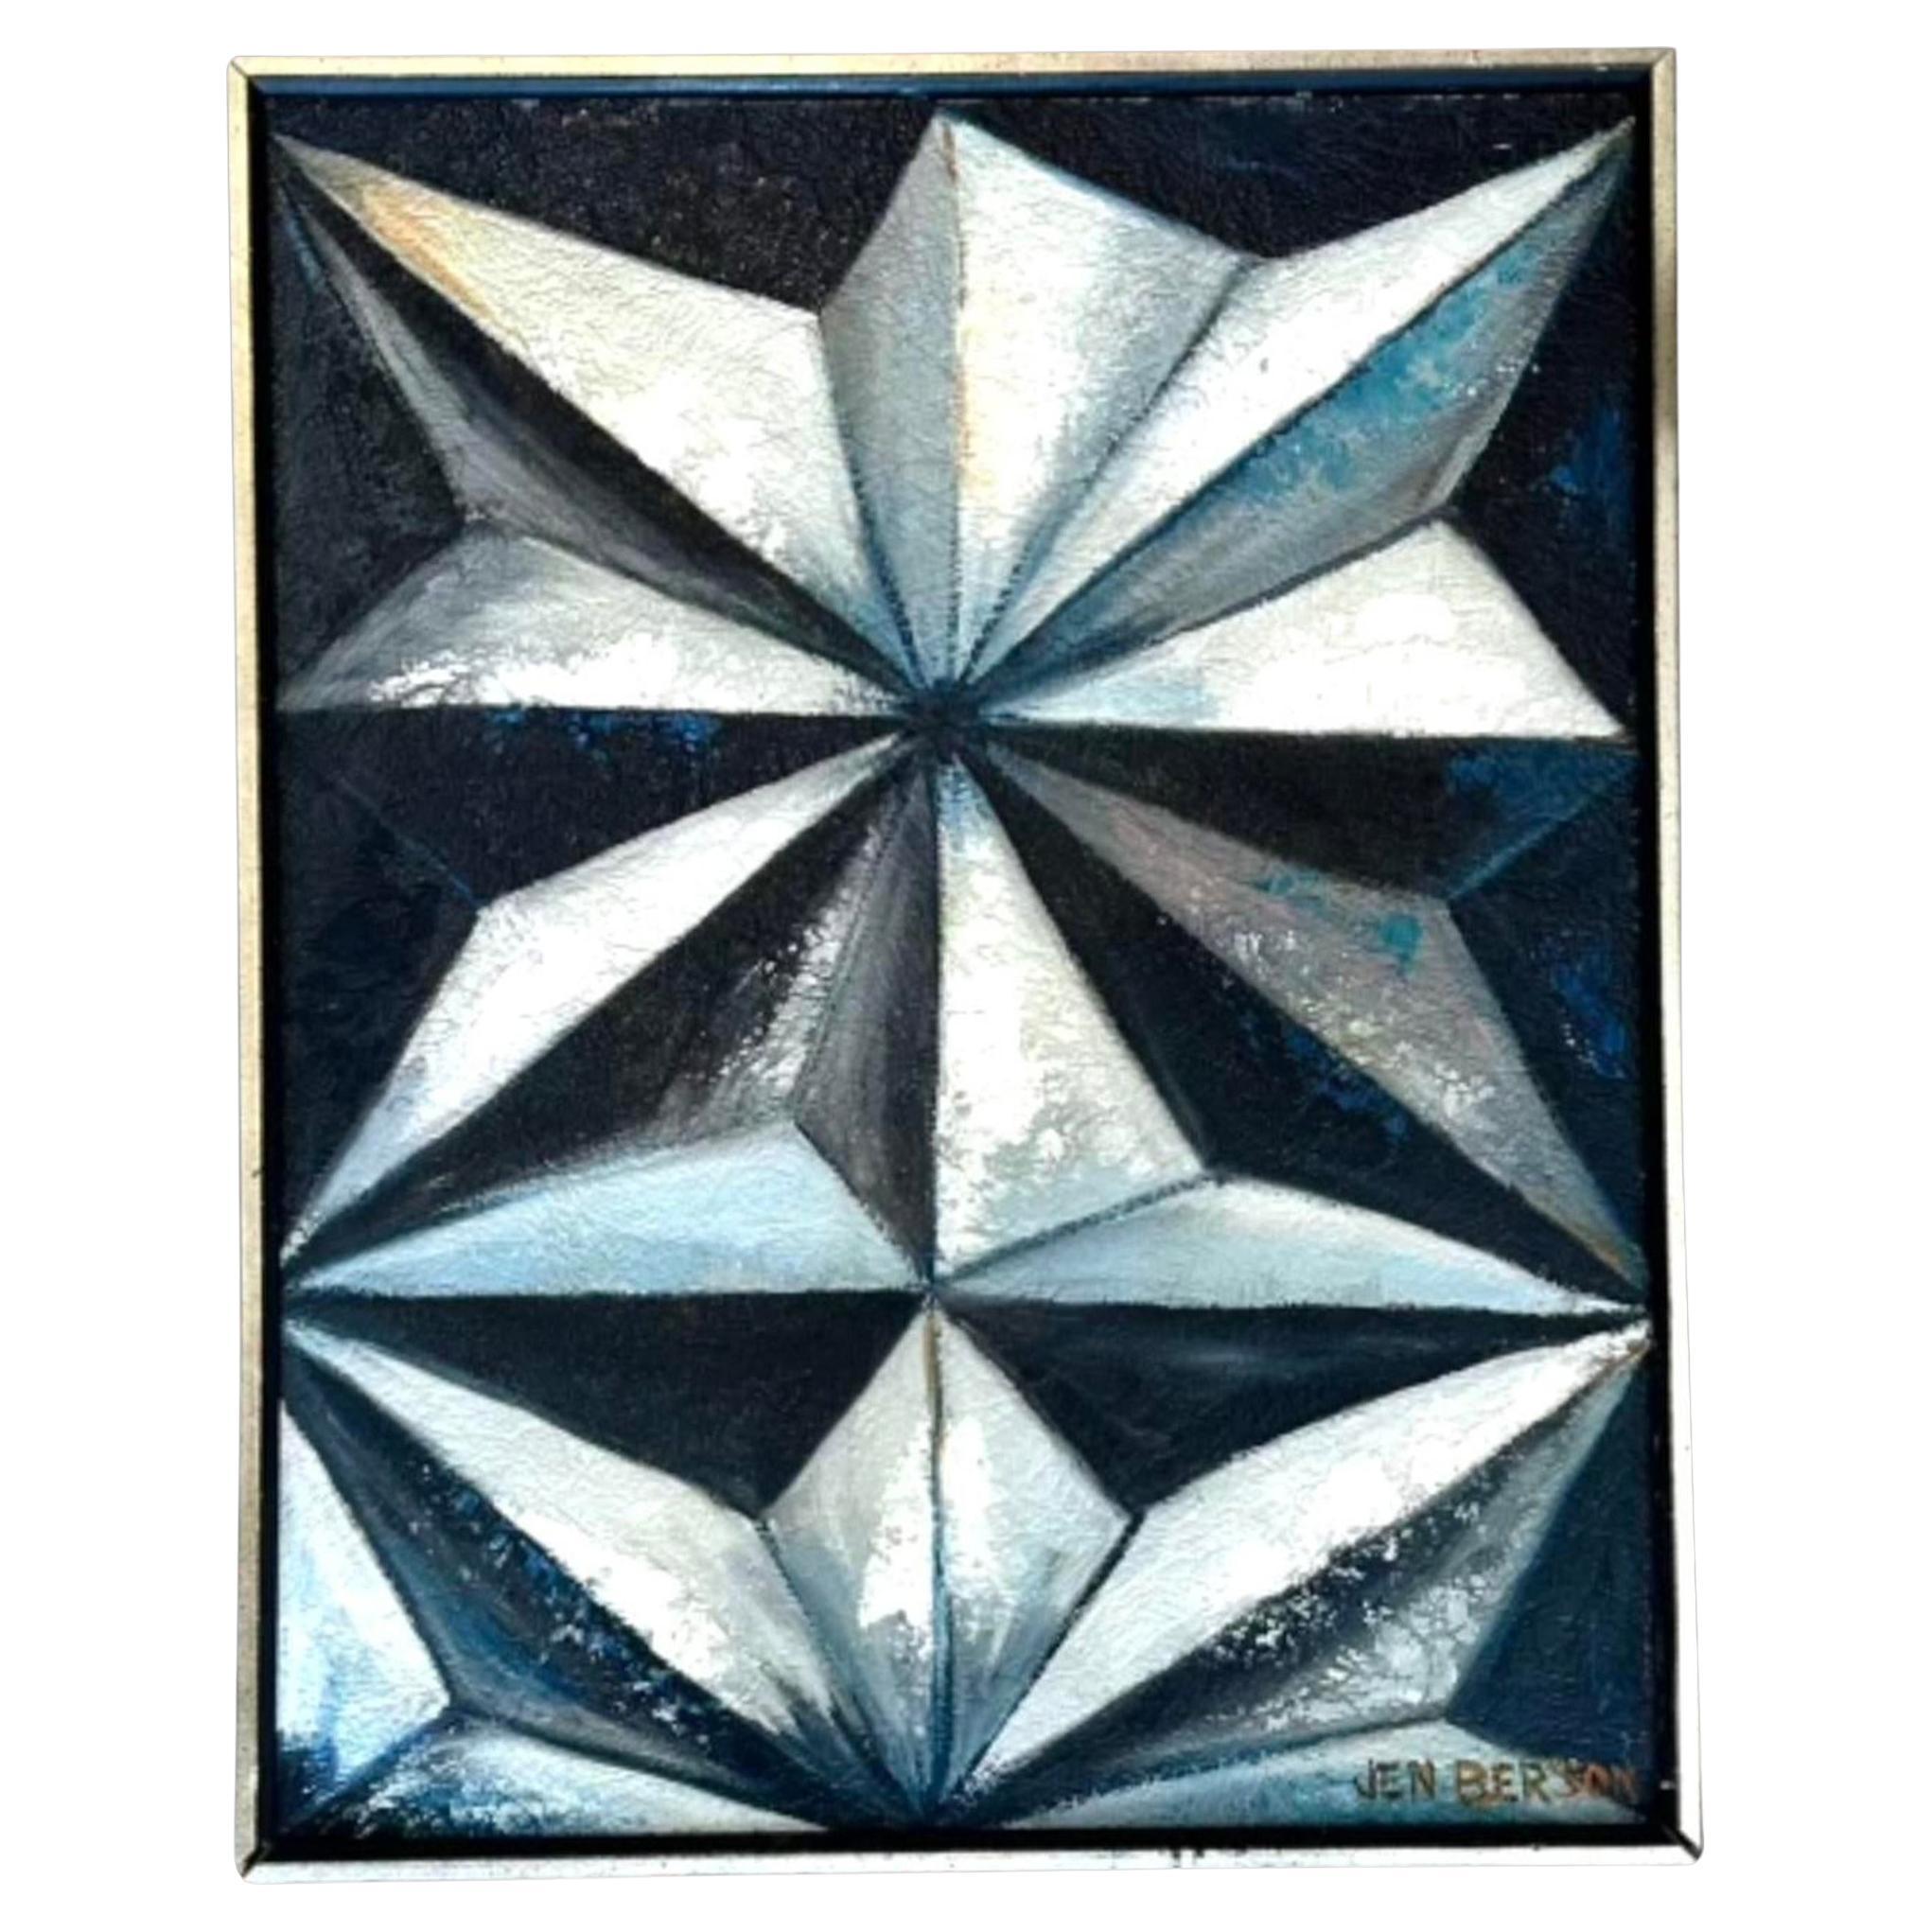 Vintage Boho Original Star Abstract Painting on Canvas (peinture abstraite sur toile)